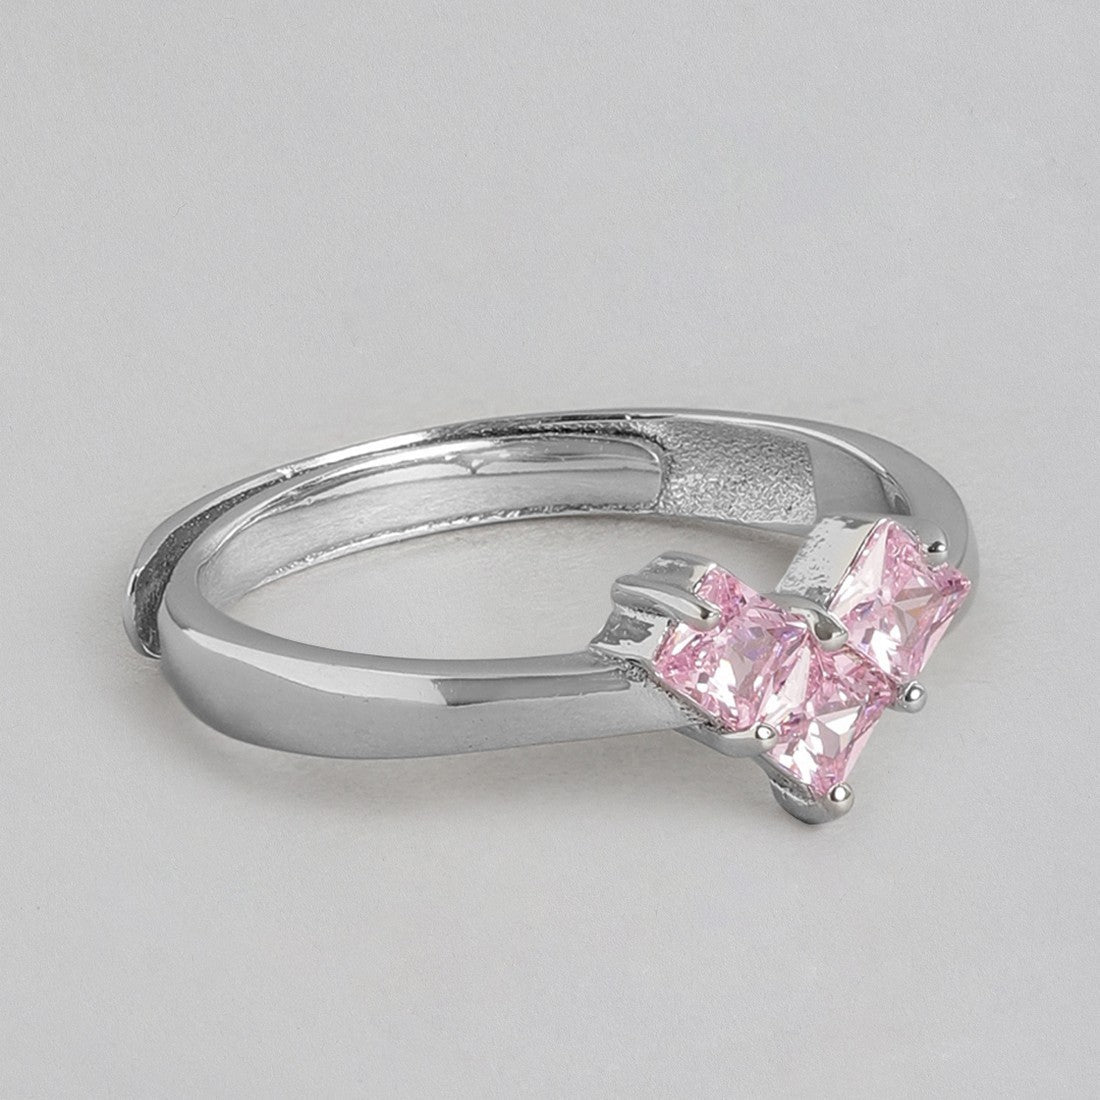 Dusty Pink Heart 925 Sterling Silver Adjustable Women Ring Gift Hamper (Adjustable)